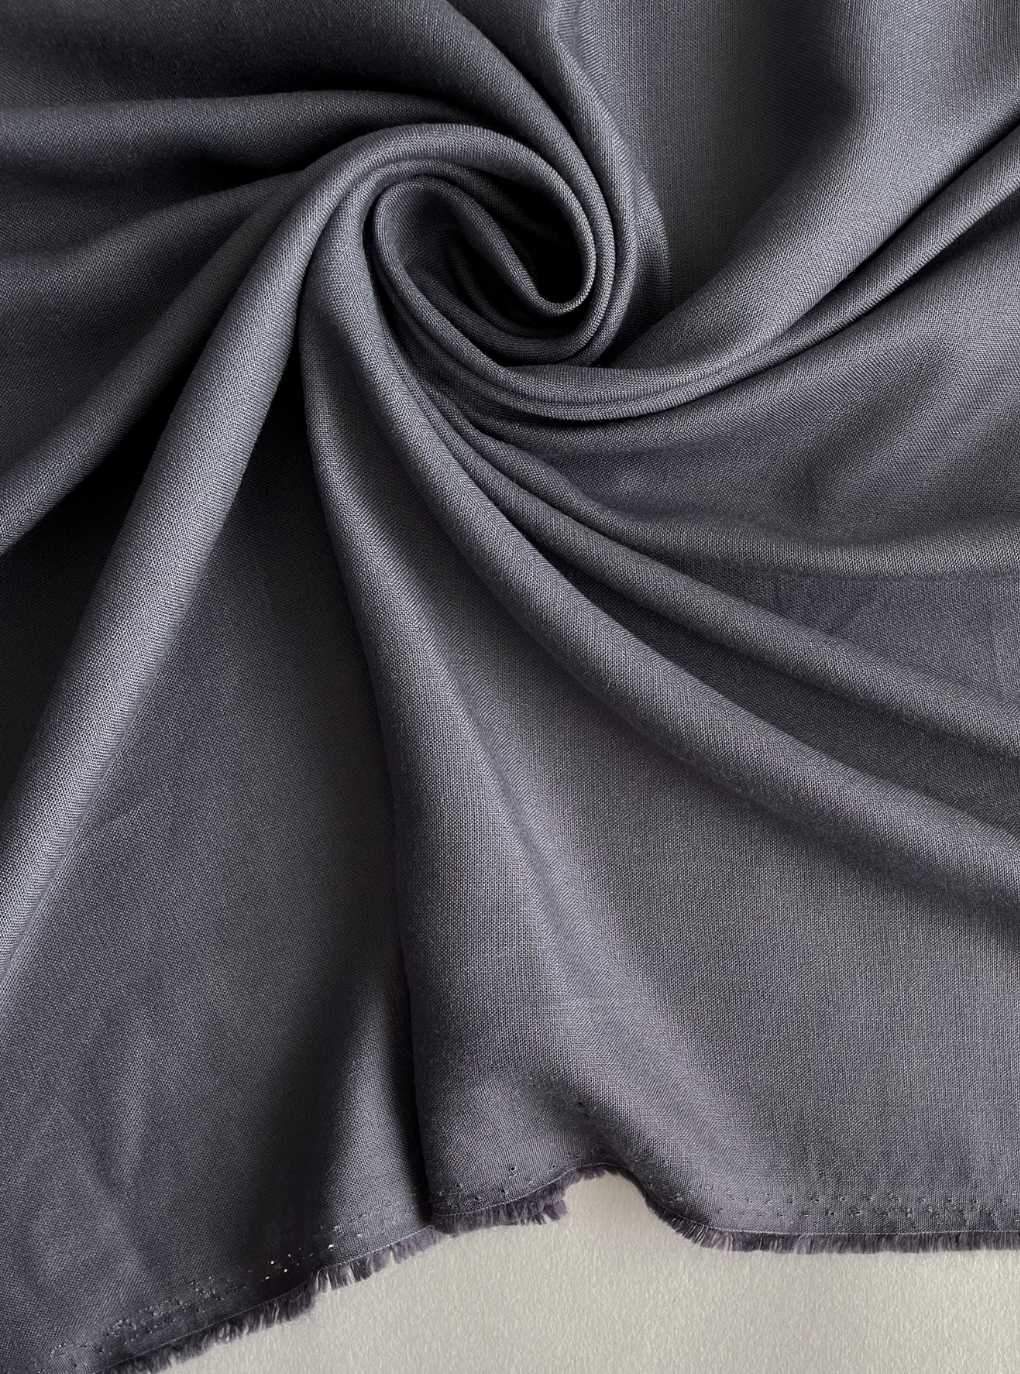 Fabric Pandit Cut Piece (CUT PIECE) Charcoal Grey Color Pure Rayon Fabric